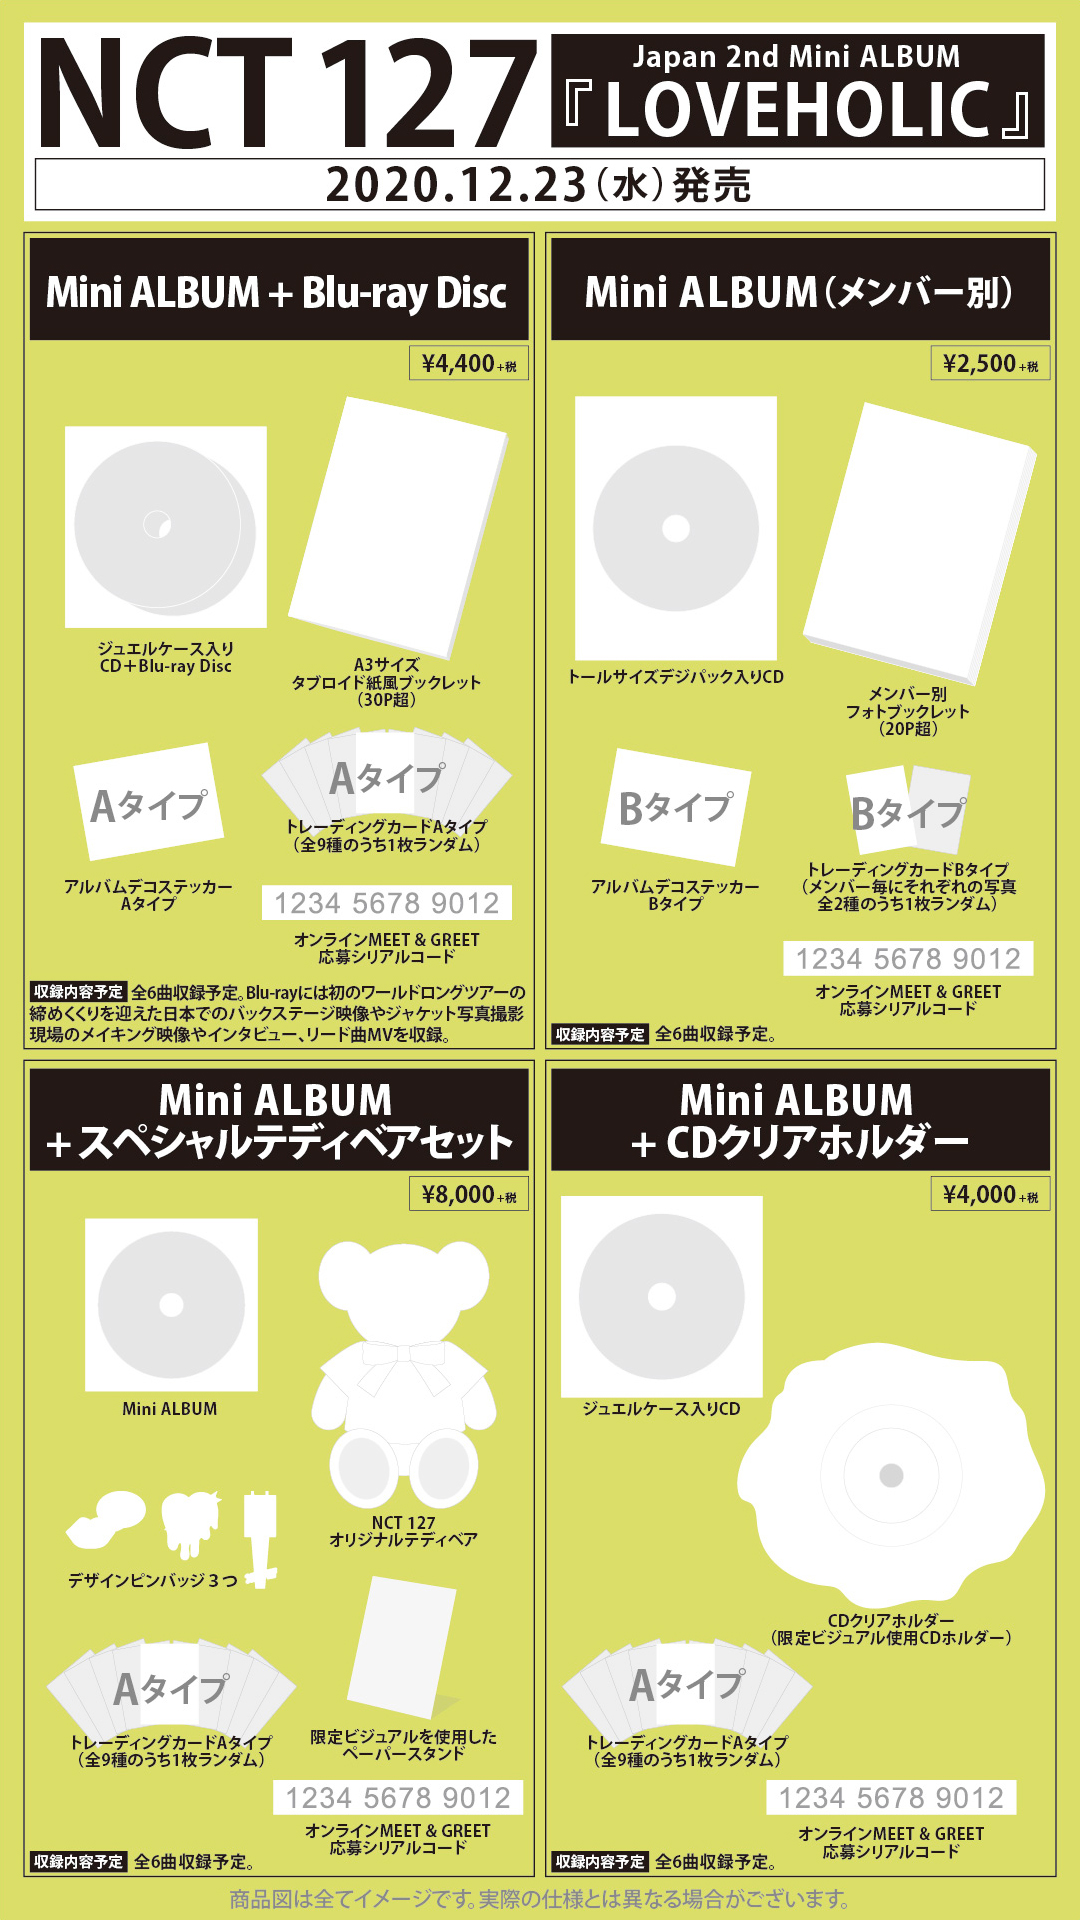 Nct 127 Japan 2nd Mini Album Loveholic 12月23日リリース決定 Hmv限定特典あり 韓国 アジア